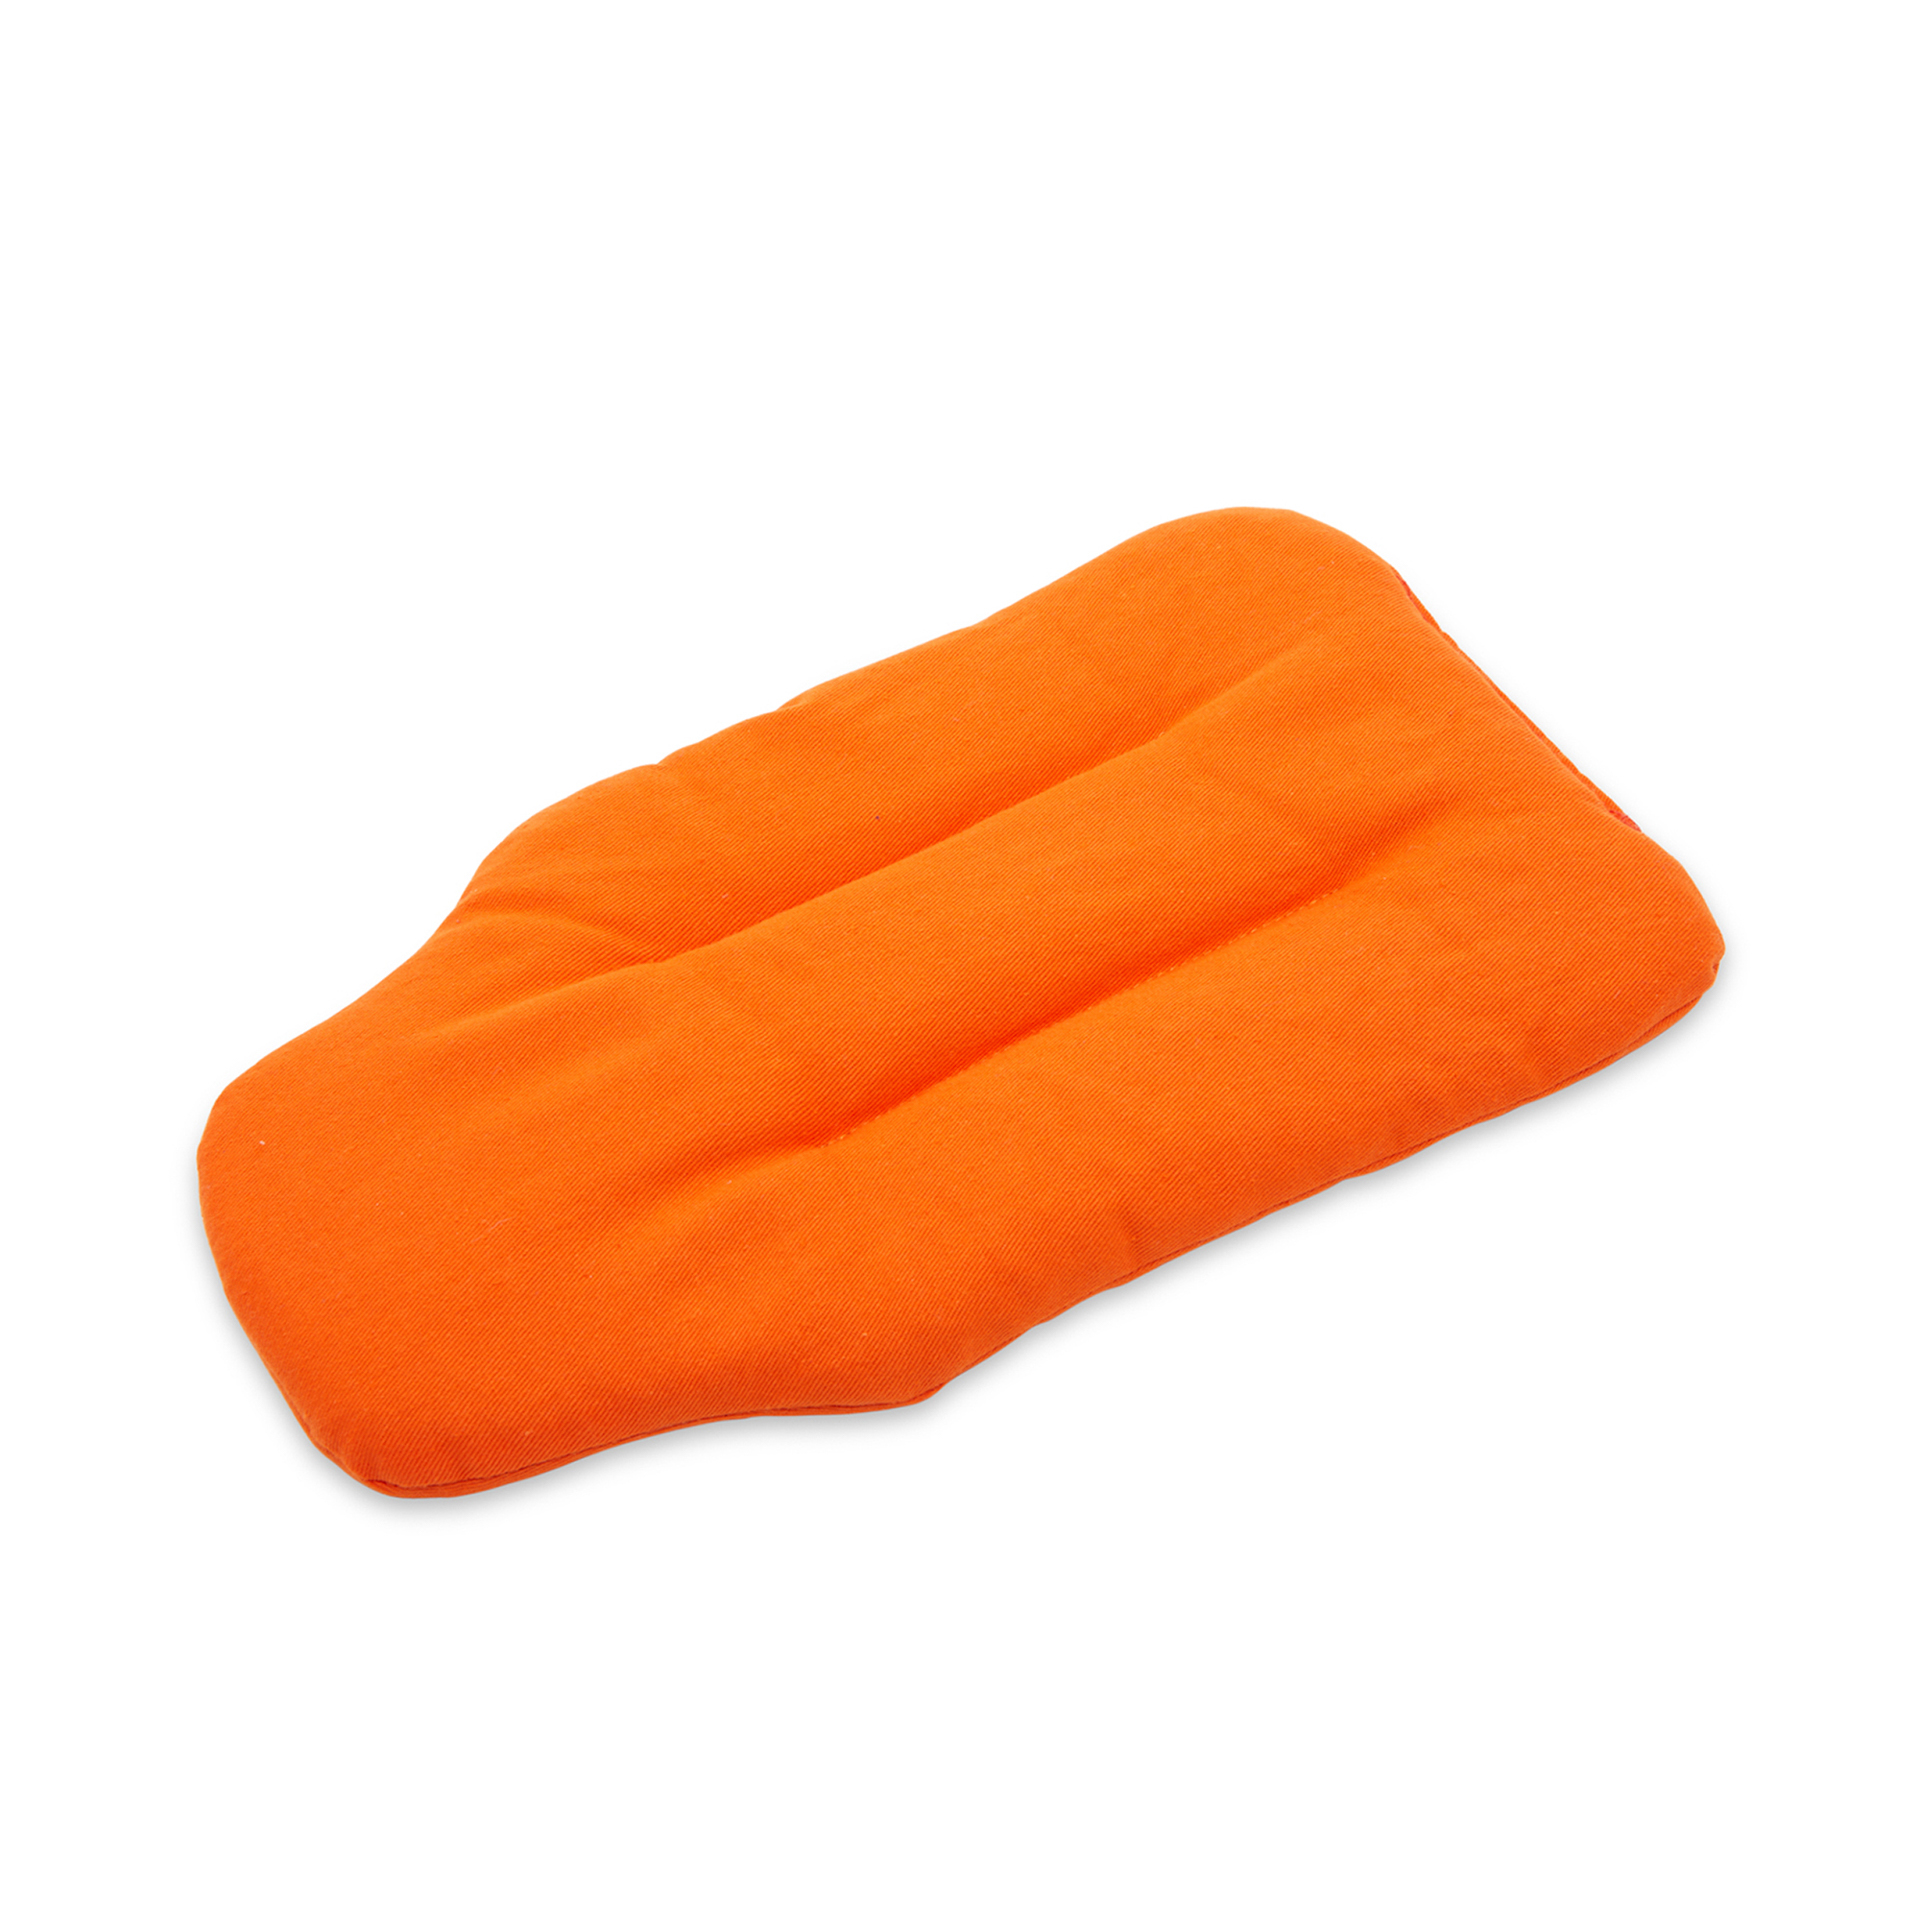 Borsa termica da microonde - Colore arancione, arancione, large